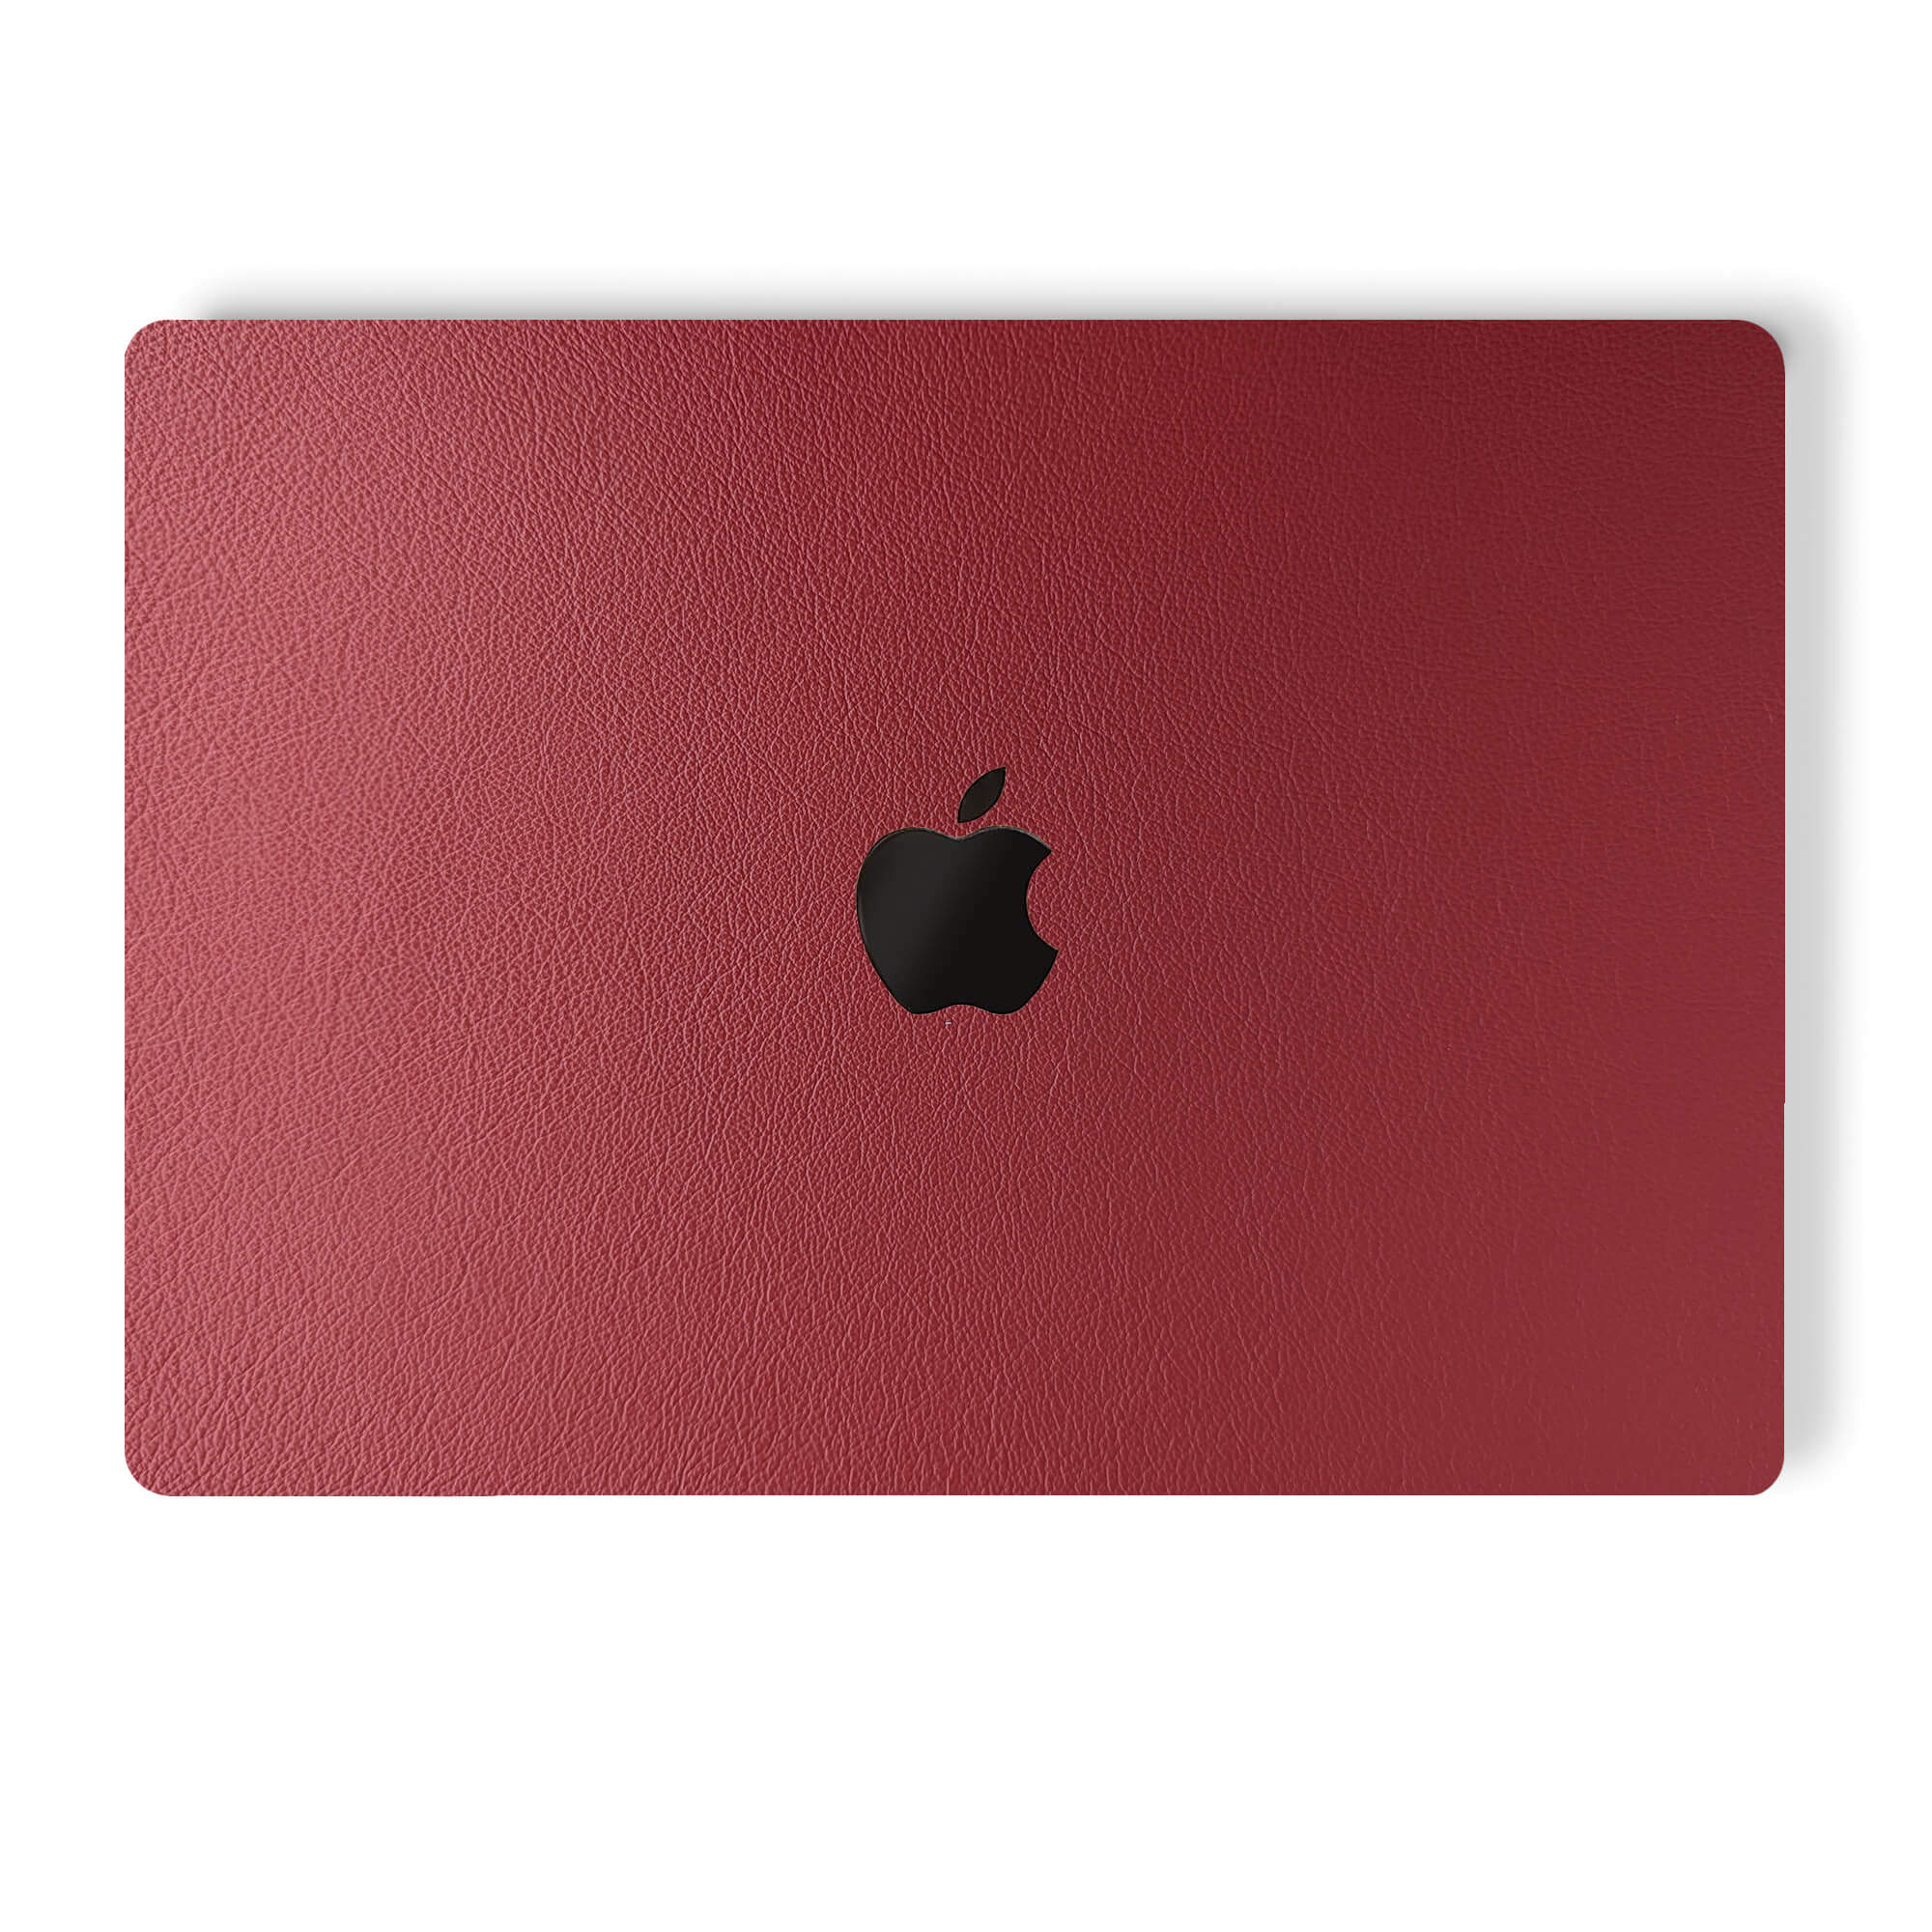 alt:Leather MacBook Skin| var:red |, LRE-MB-Pro16, LRE-MB-Pro15, LRE-MB-Pro1320, LRE-MB-Air20, LRE-MB-Ret15, LRE-MB-Ret13, LRE-MB-Air13, LRE-MB-12